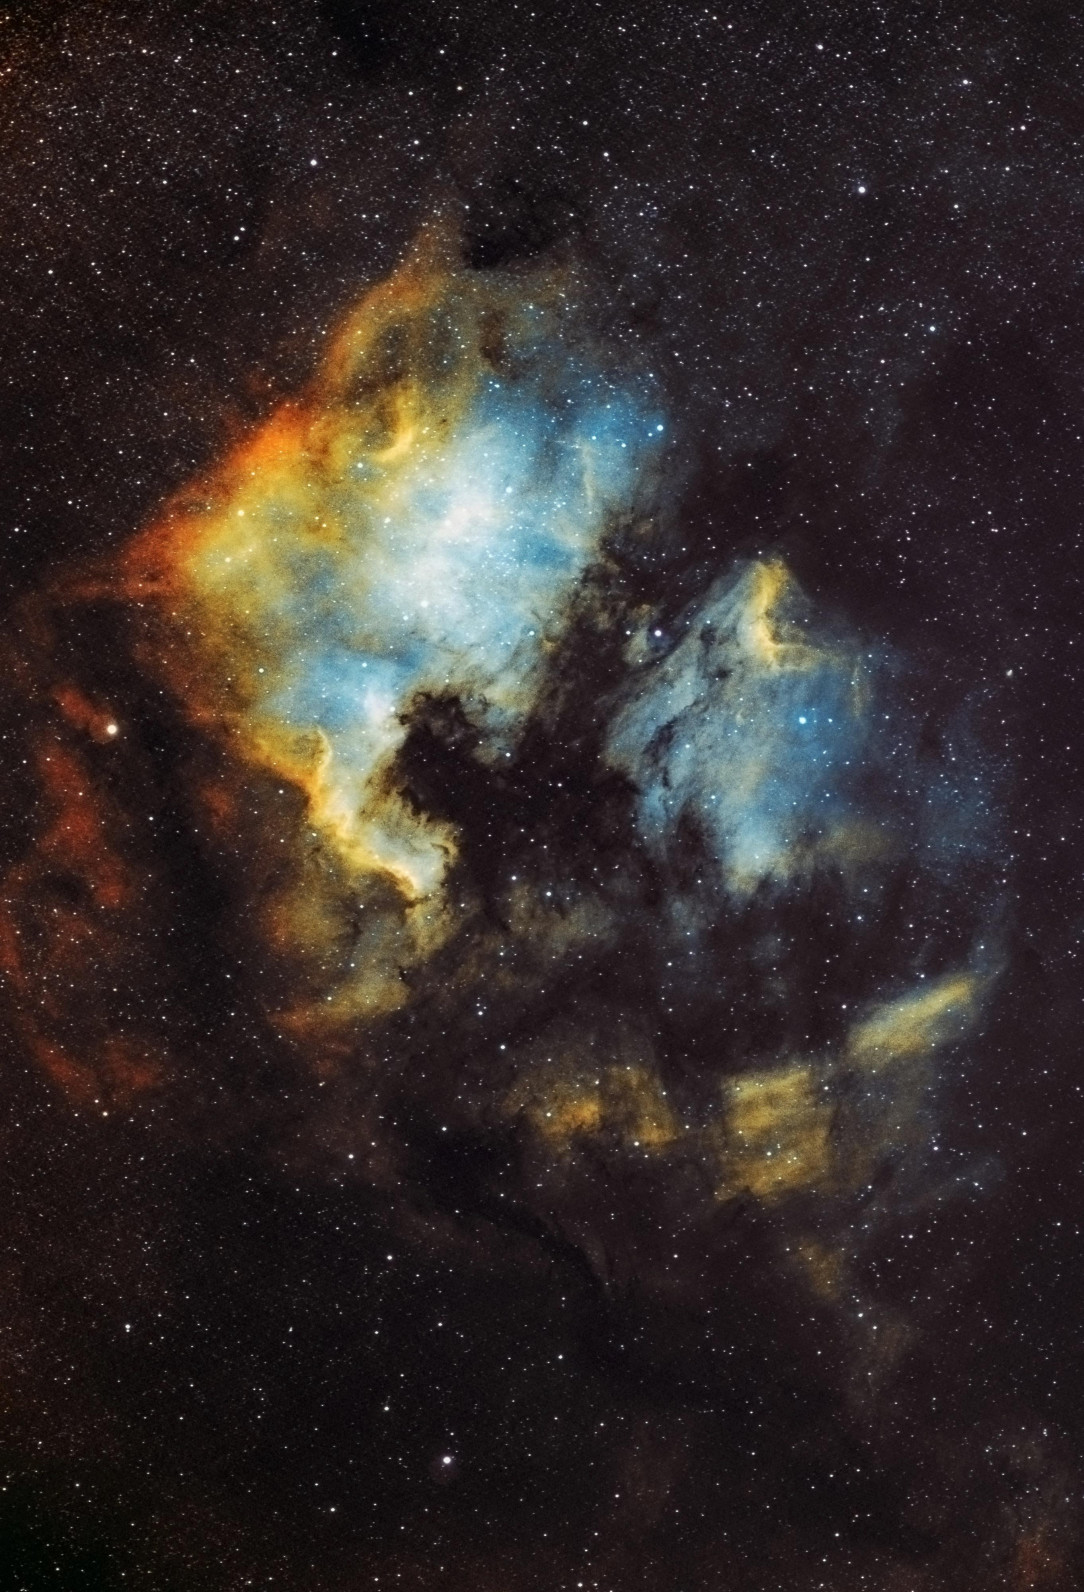 North American Nebula from Toronto, Canada